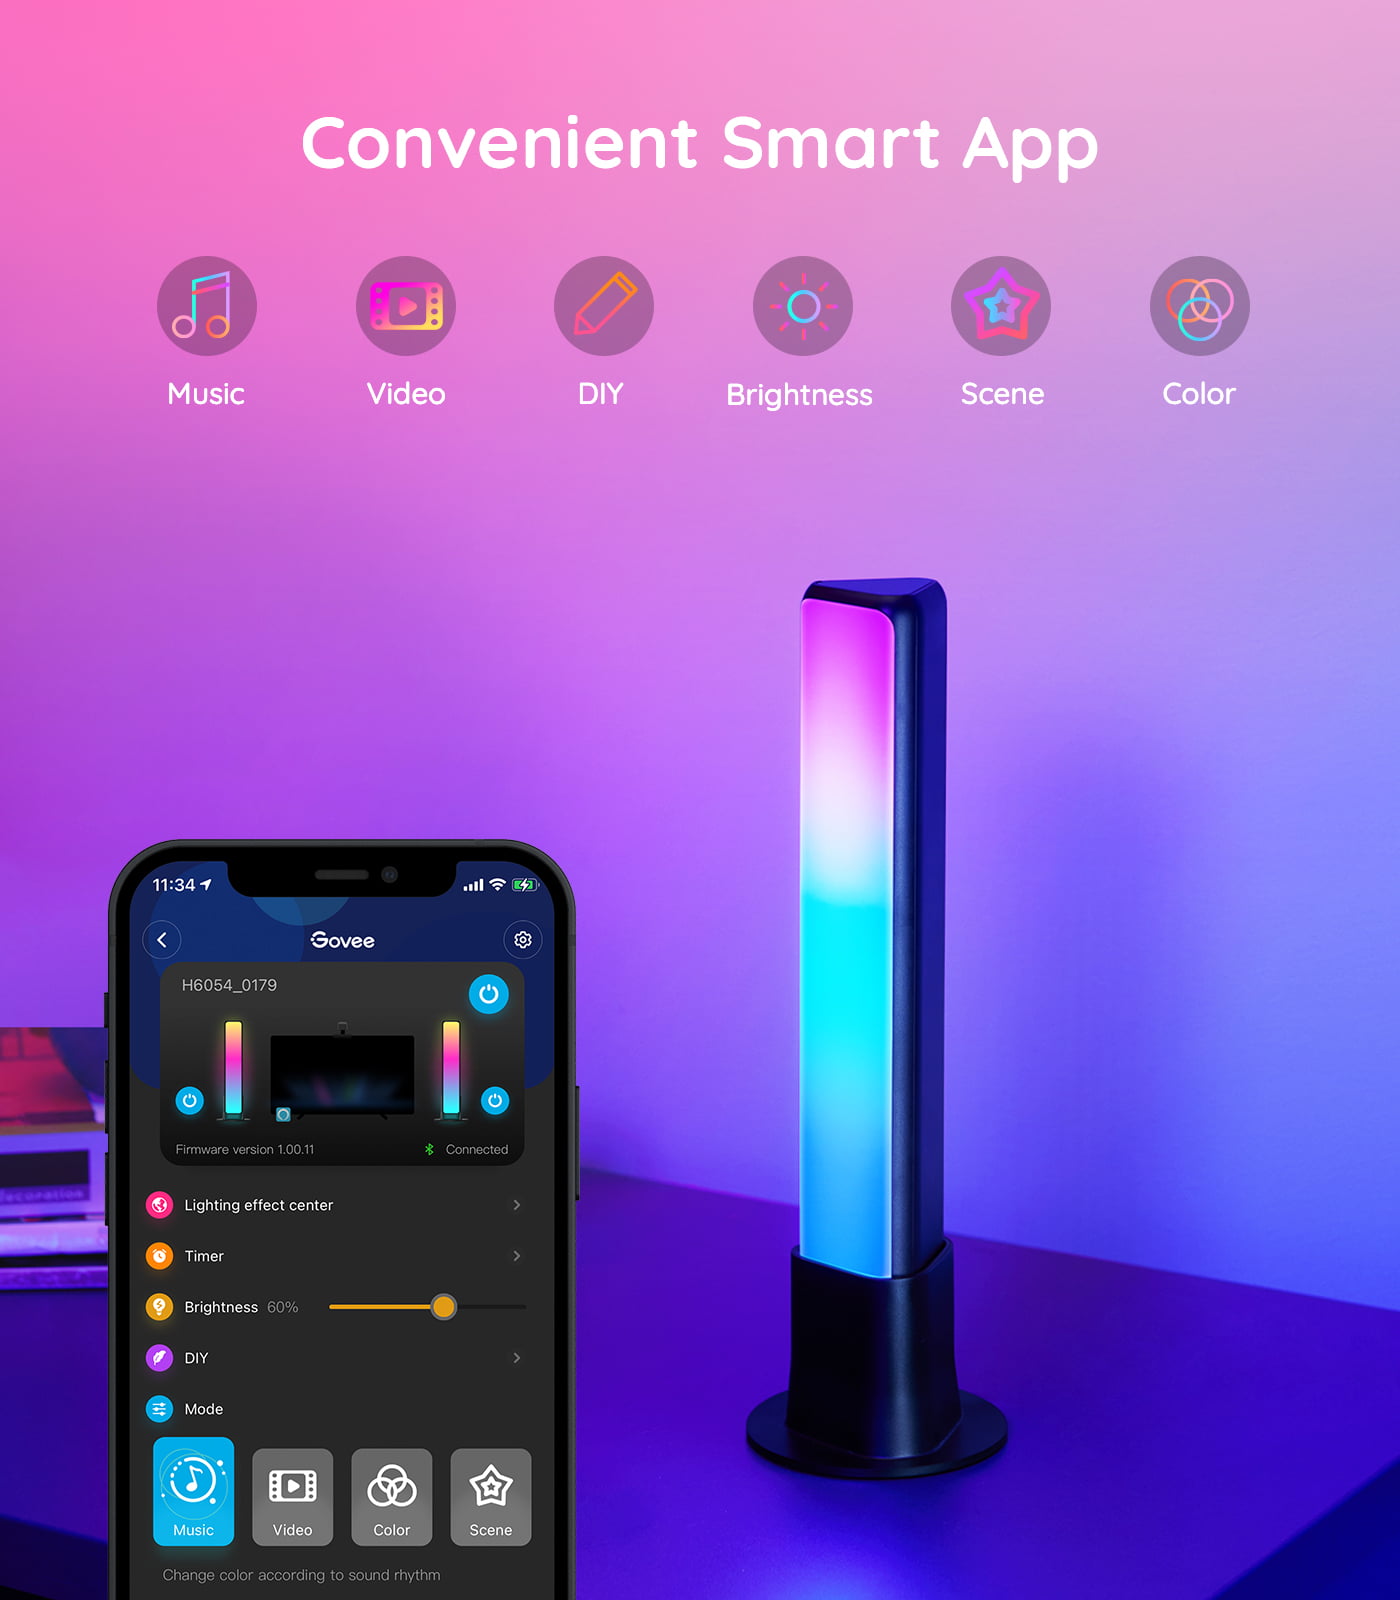 Govee - SET 2x Flow Plus SMART LED TV & Gaming - RGBICWW Wi-Fi